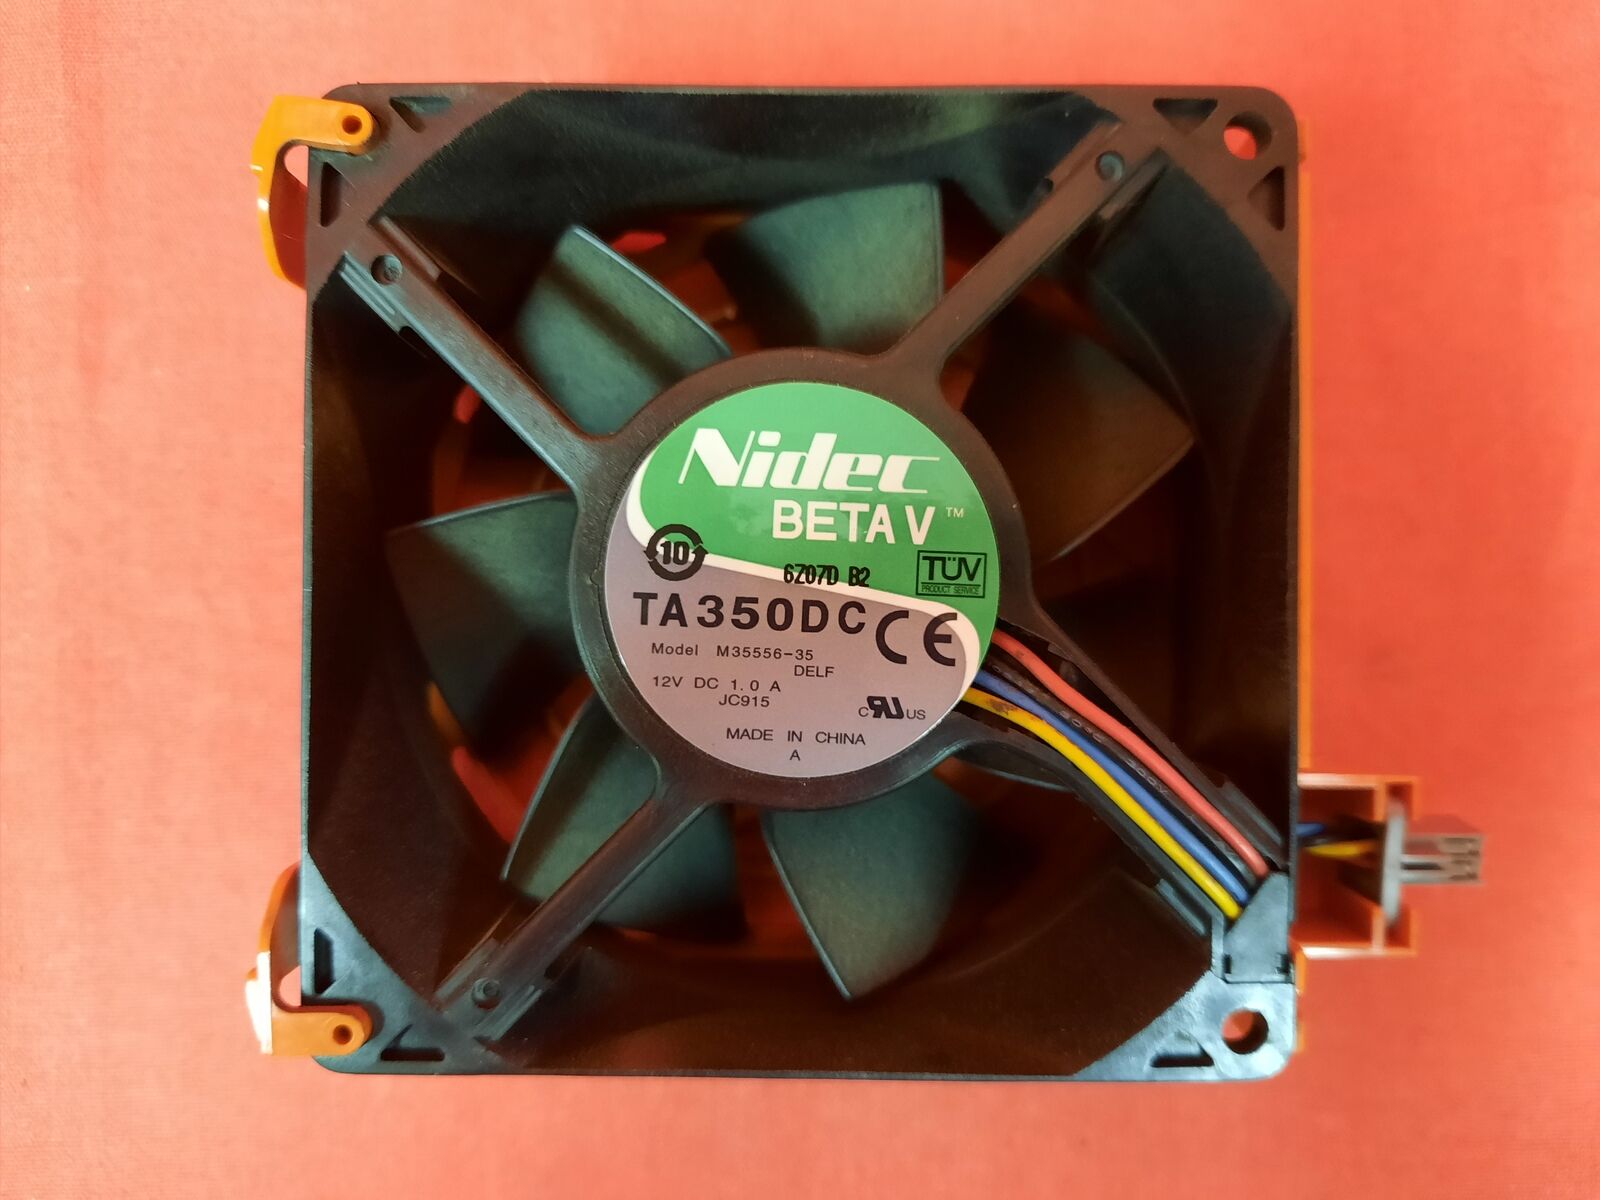 Nidec Betav TA350DC Quiet Case Cooling Thermal Sensor Fan Orange 8471